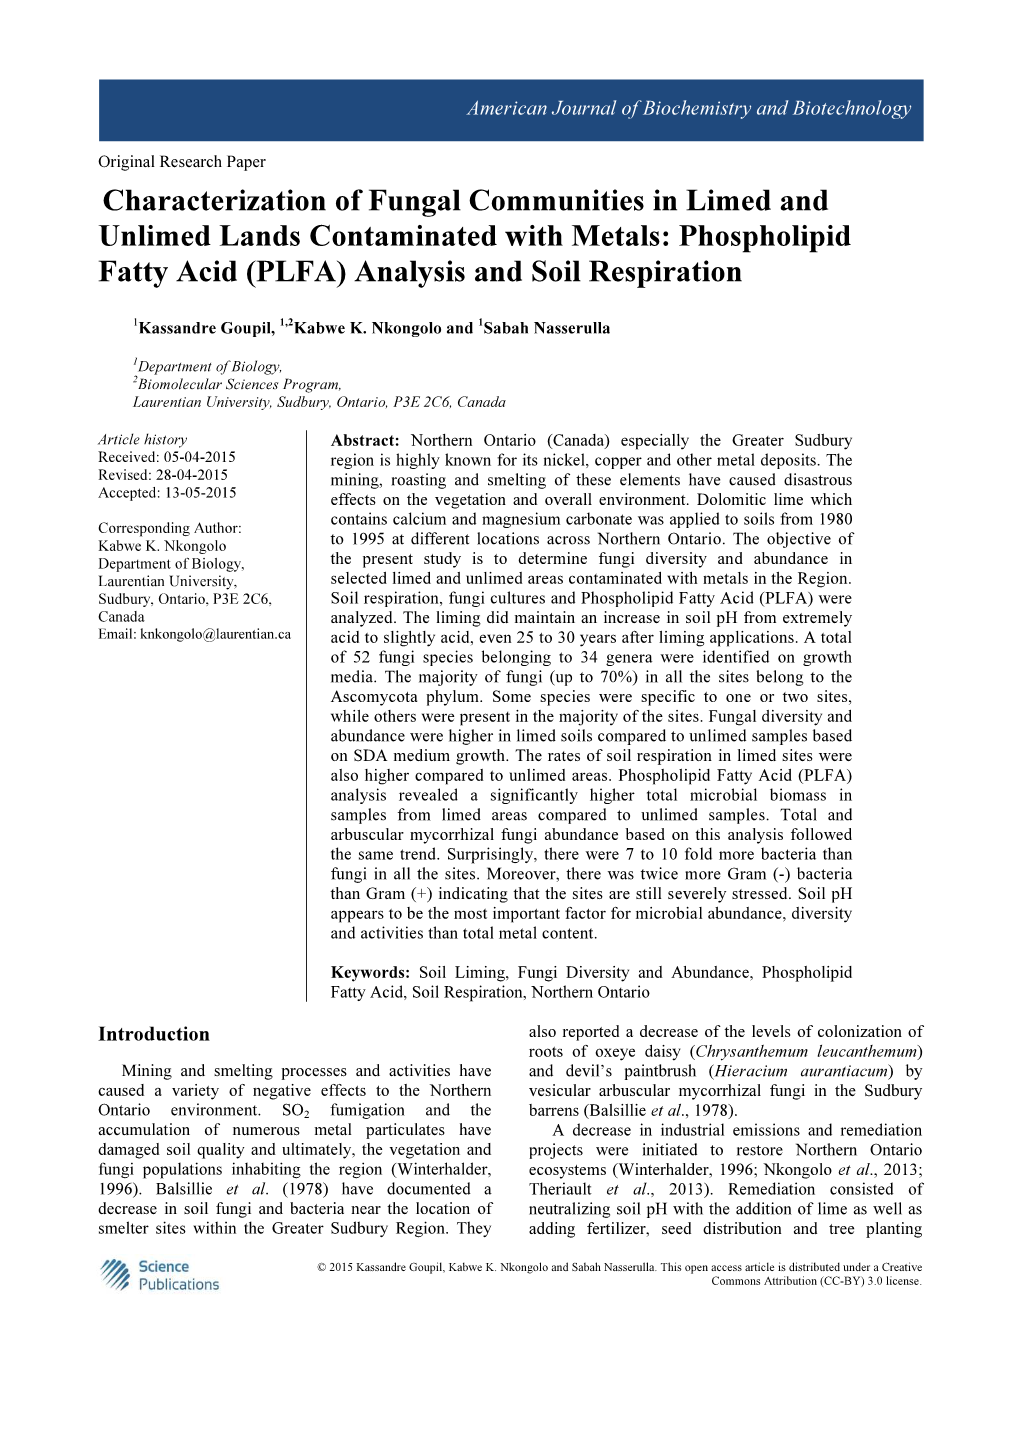 Phospholipid Fatty Acid (PLFA) Analysis and Soil Respiration